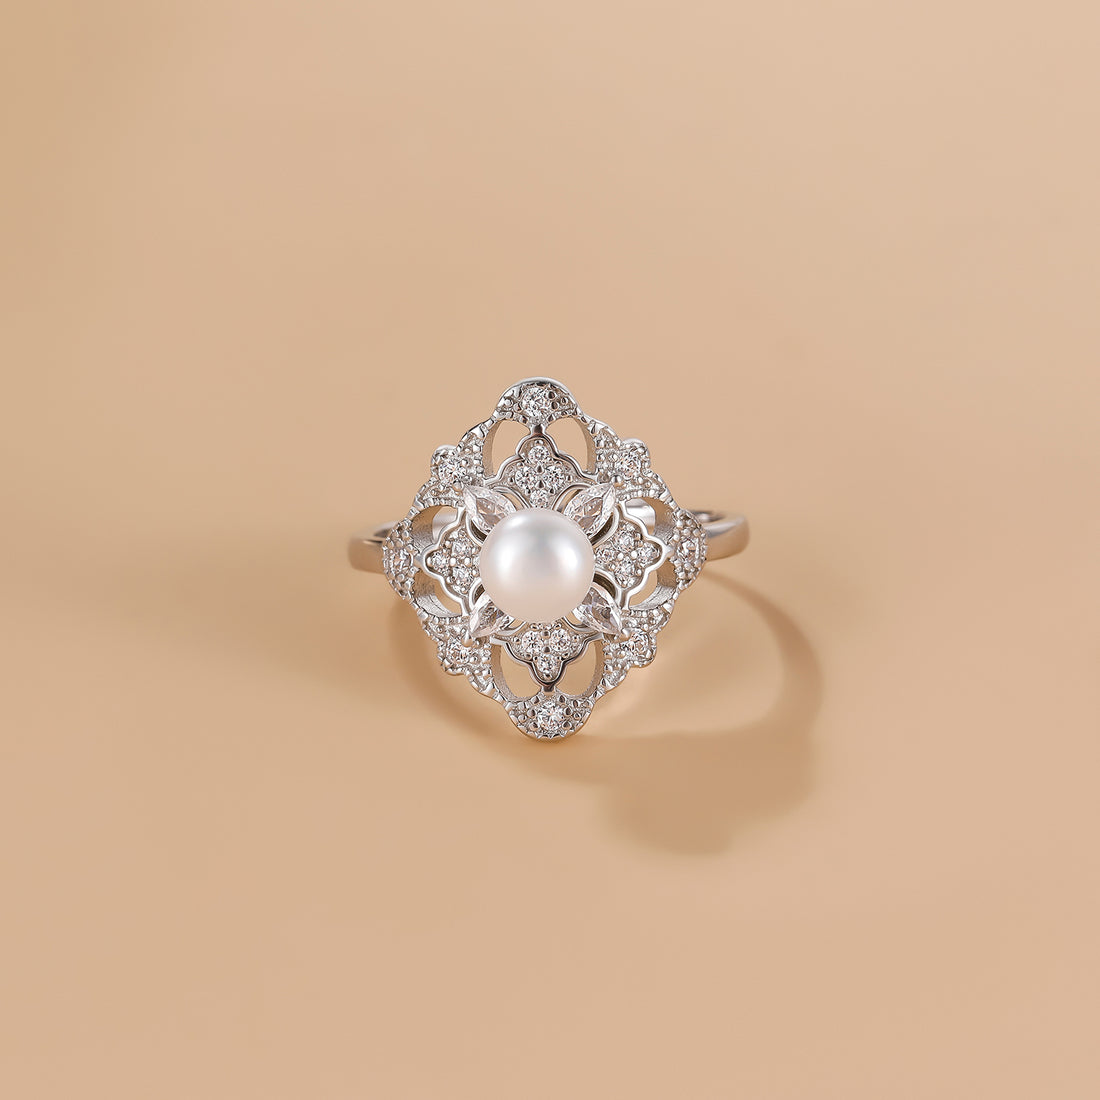 Vintage Pearl Ring in Sterling Silver